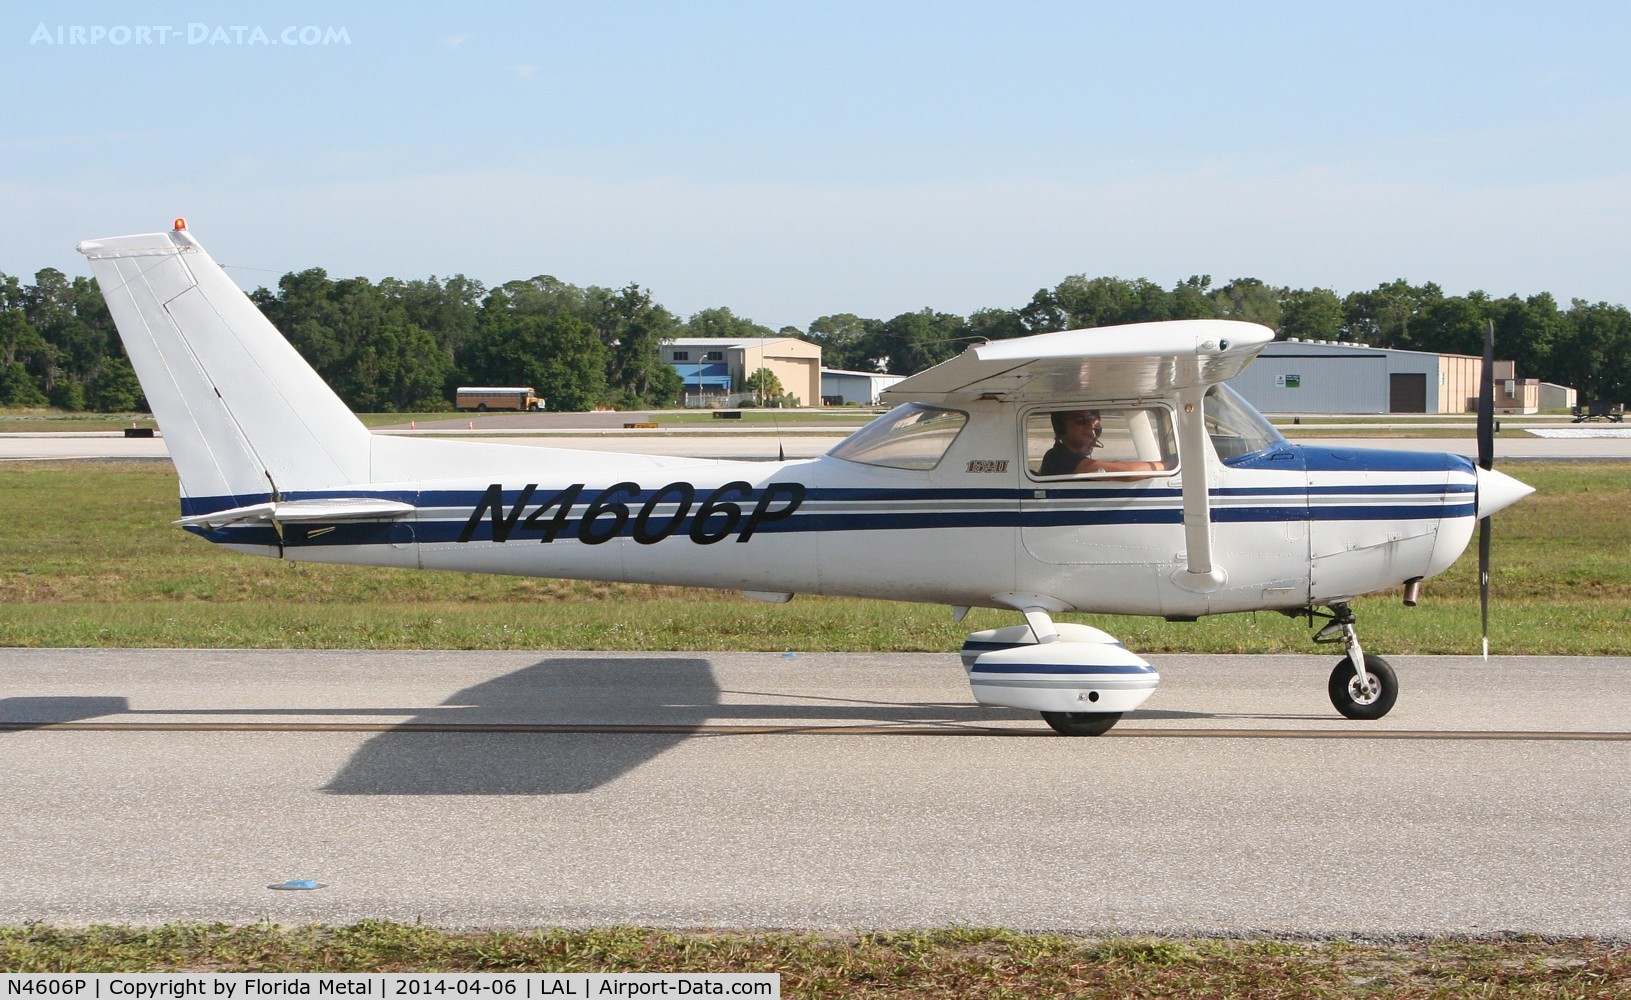 N4606P, 1980 Cessna 152 C/N 15284778, Cessna 152